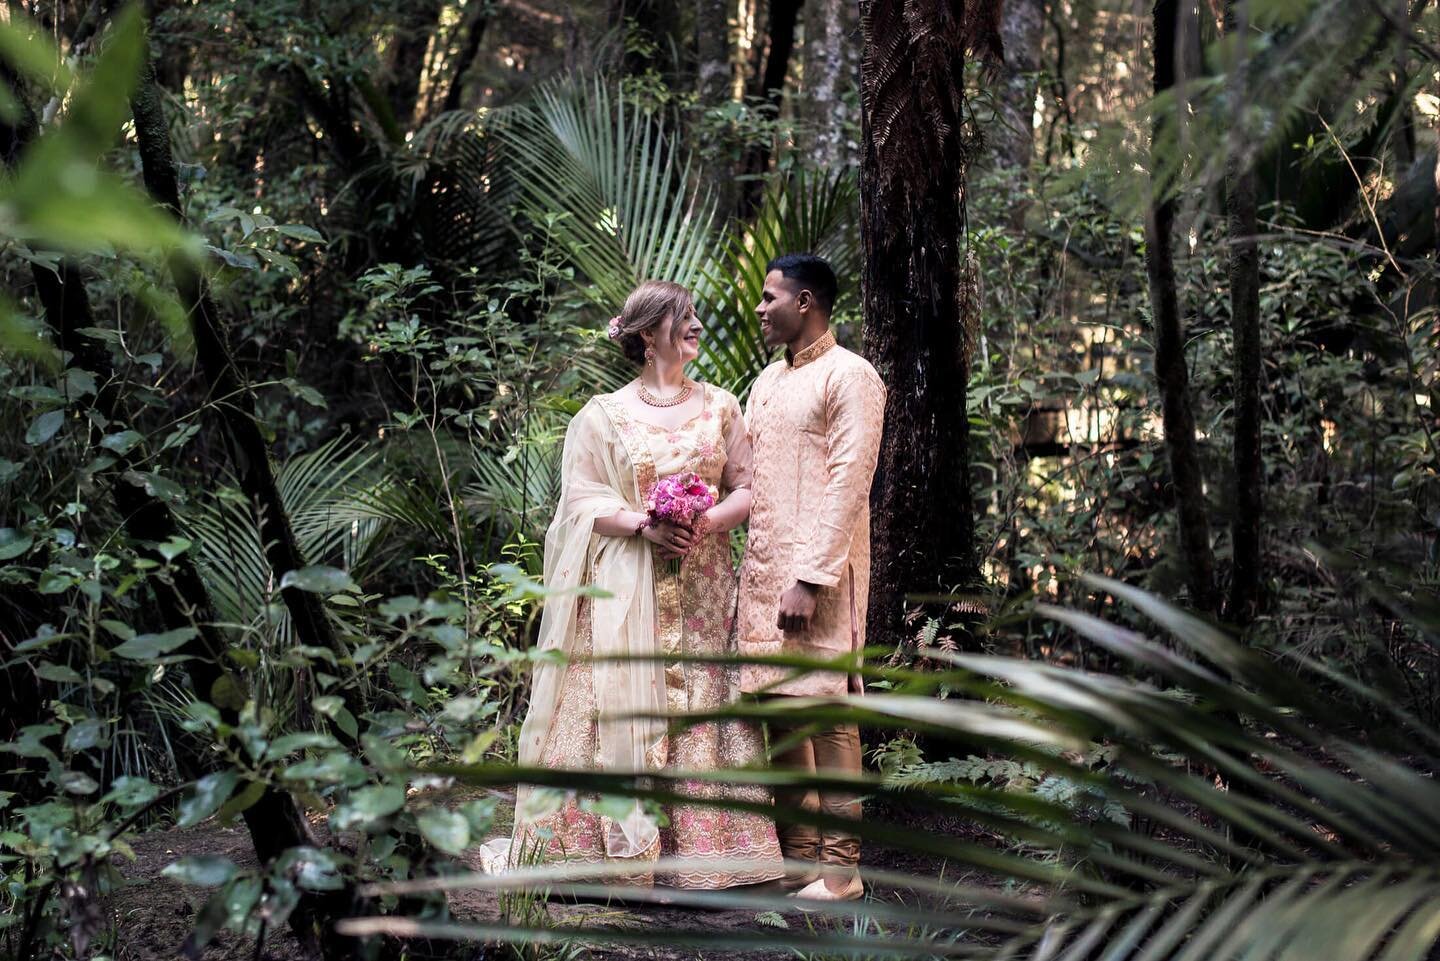 Beautiful New Zealand Bush ❤️ sometimes you&rsquo;ve just got to go looking in the bush for the perfect backdrop.
.
.
.
.
.
@aucklandweddings #newzealandbush #beautifulbride #weddingsari #indianwedding #aucklandweddingphotographer #southaucklandweddi